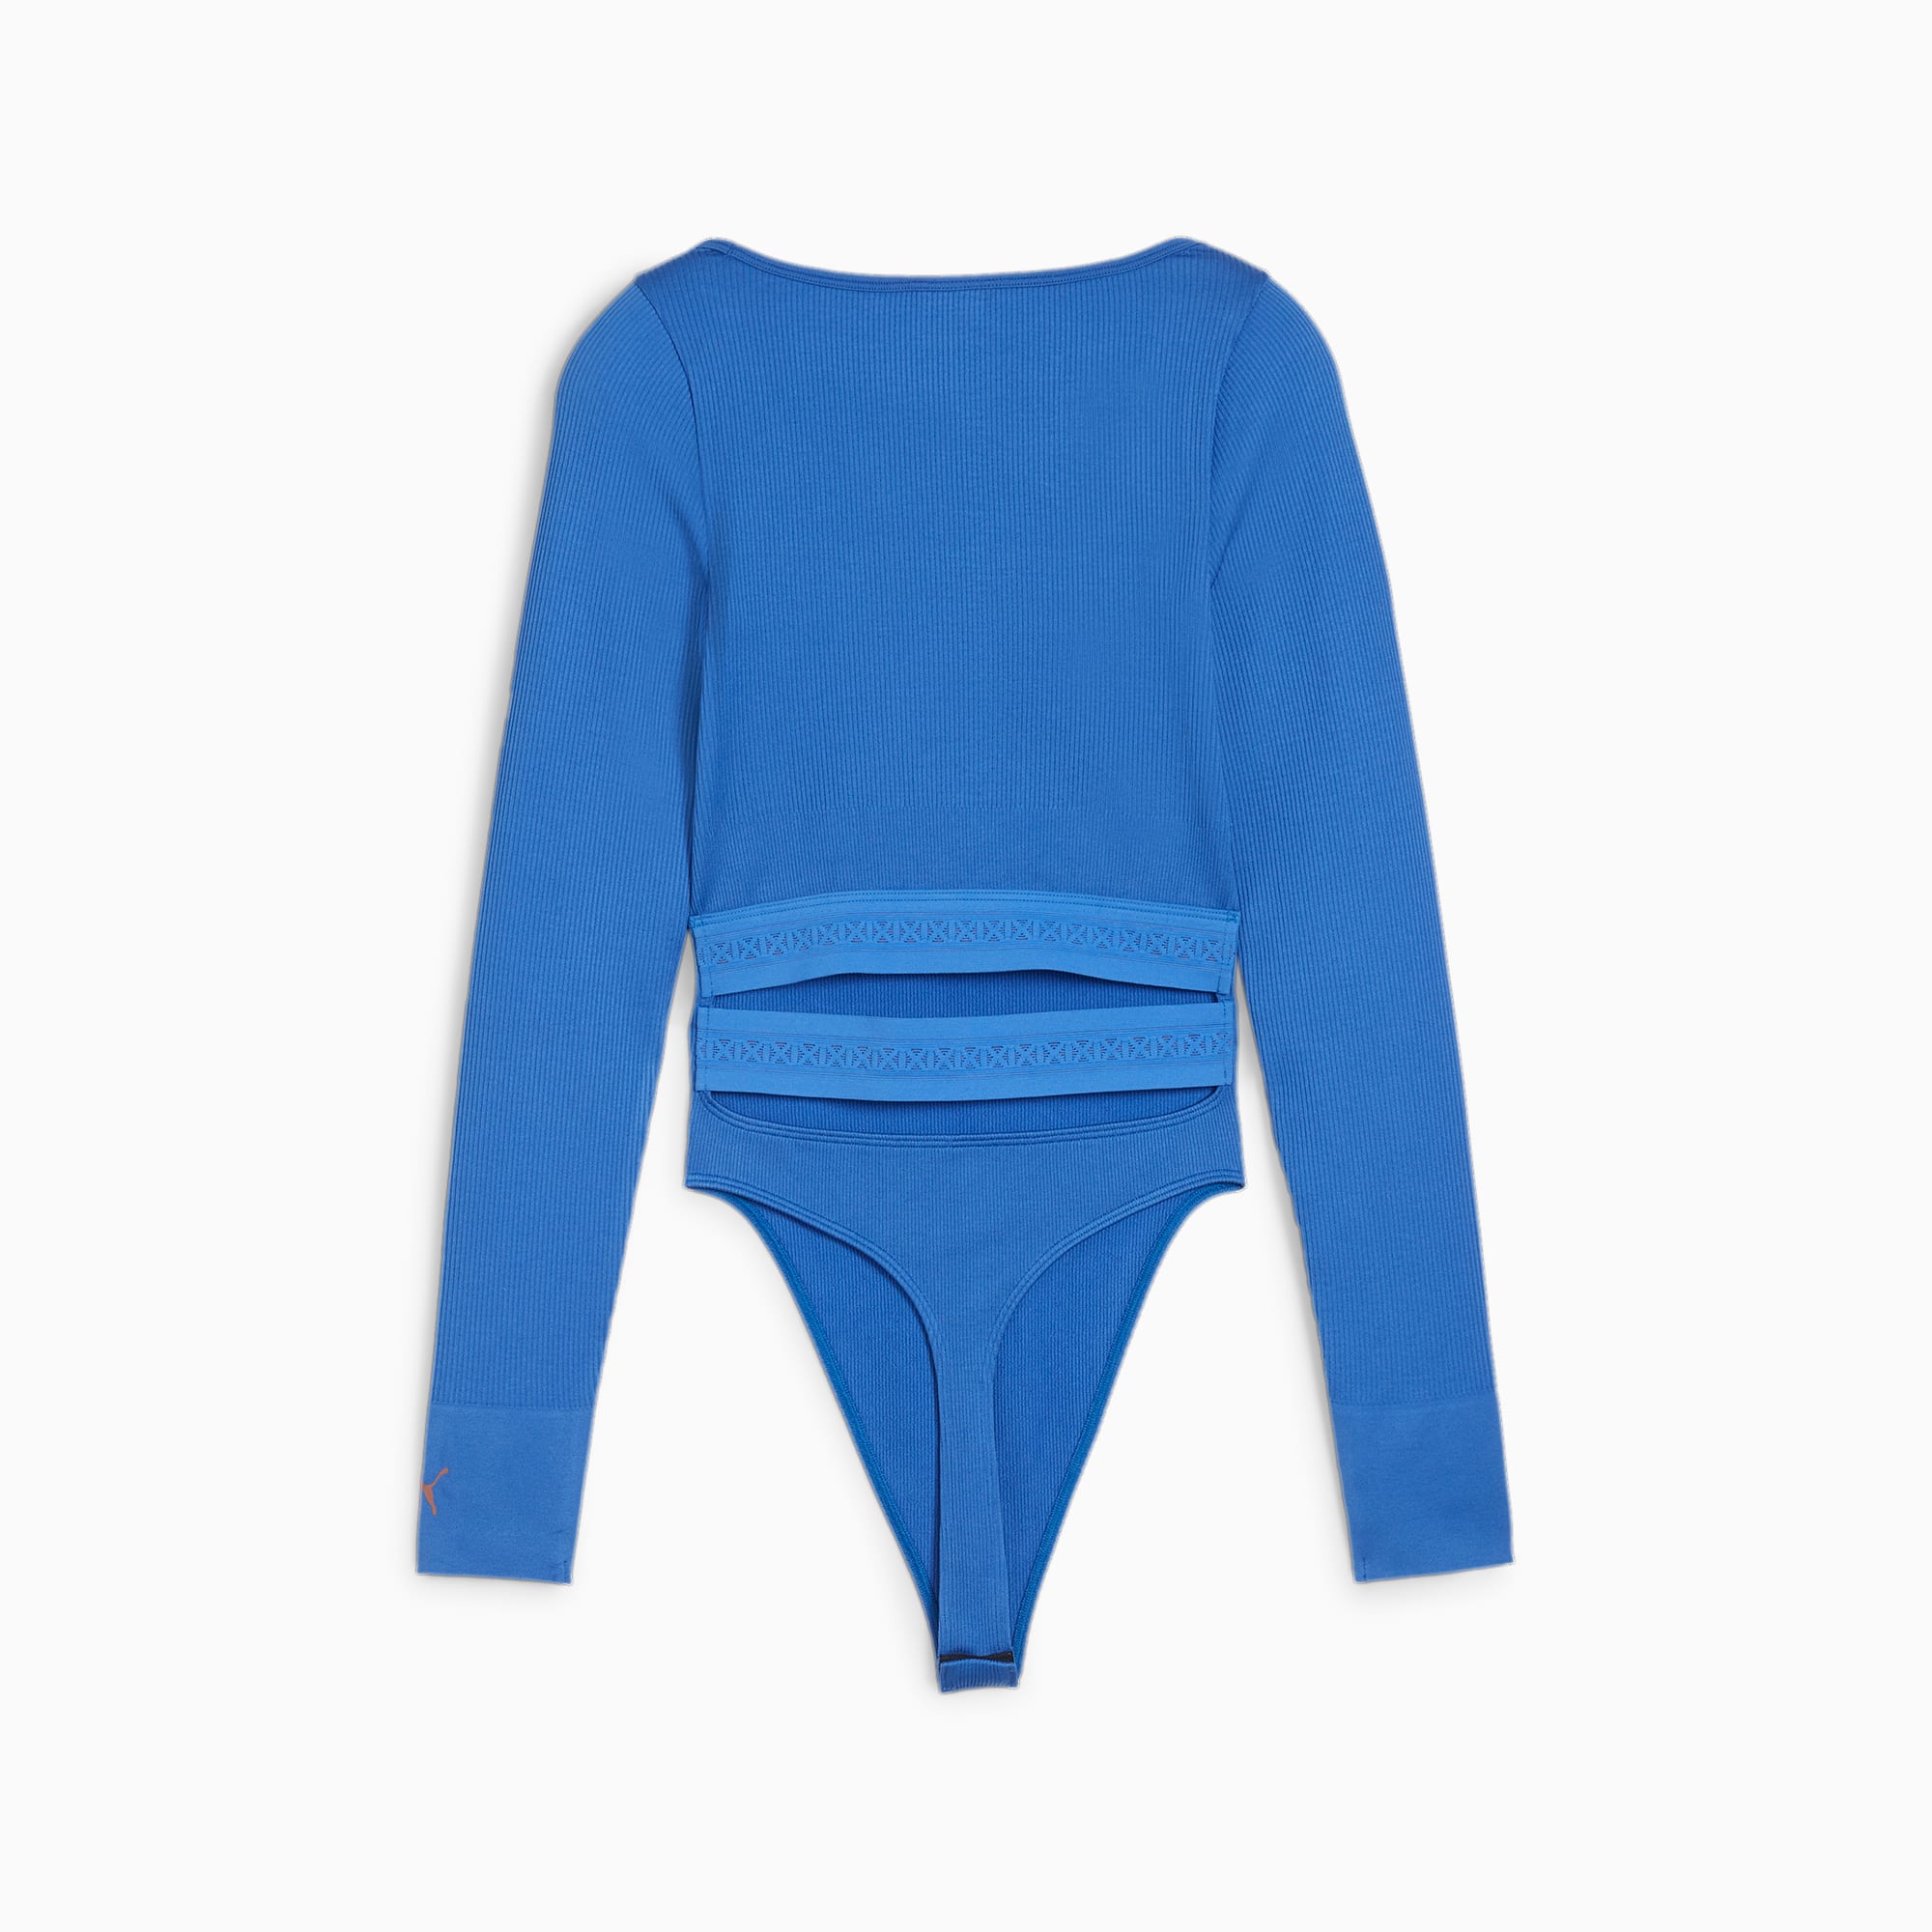 PUMA X Pamela Reif Women's Ribbed Bodysuit, Bluevender, Size S, Clothing